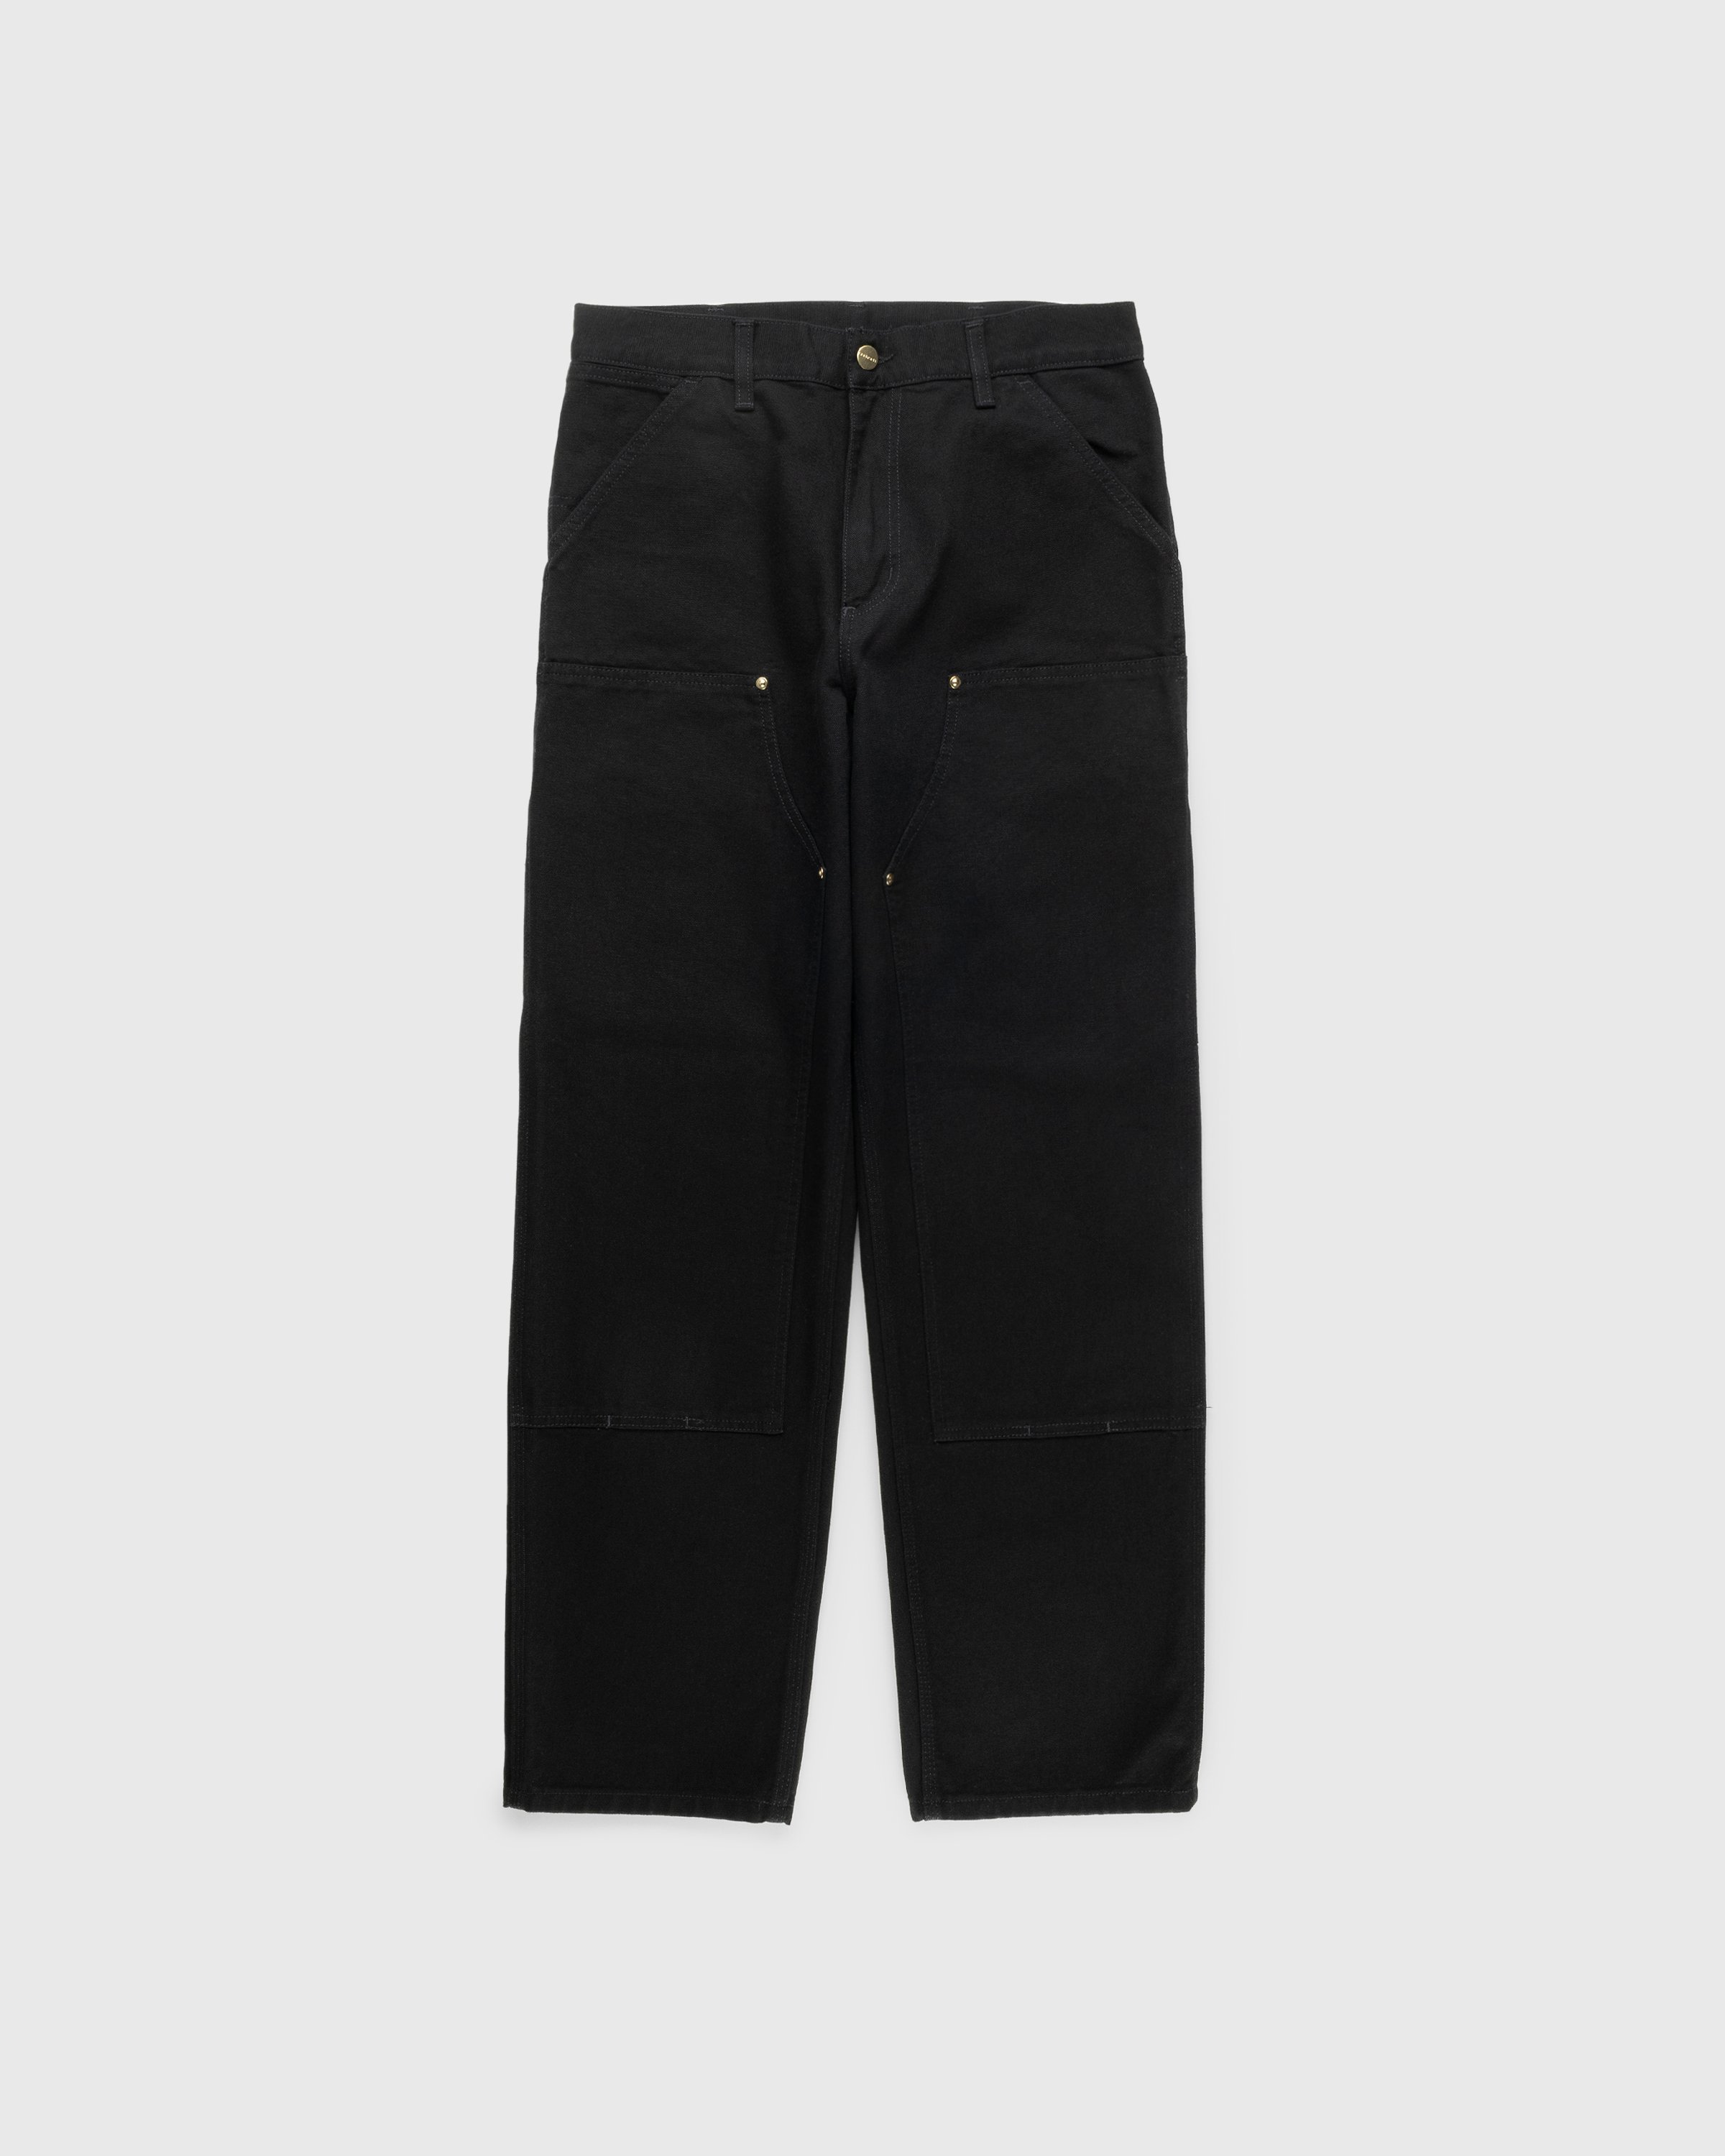 Carhartt WIP - Double Knee Pant Black - Clothing - Black - Image 1